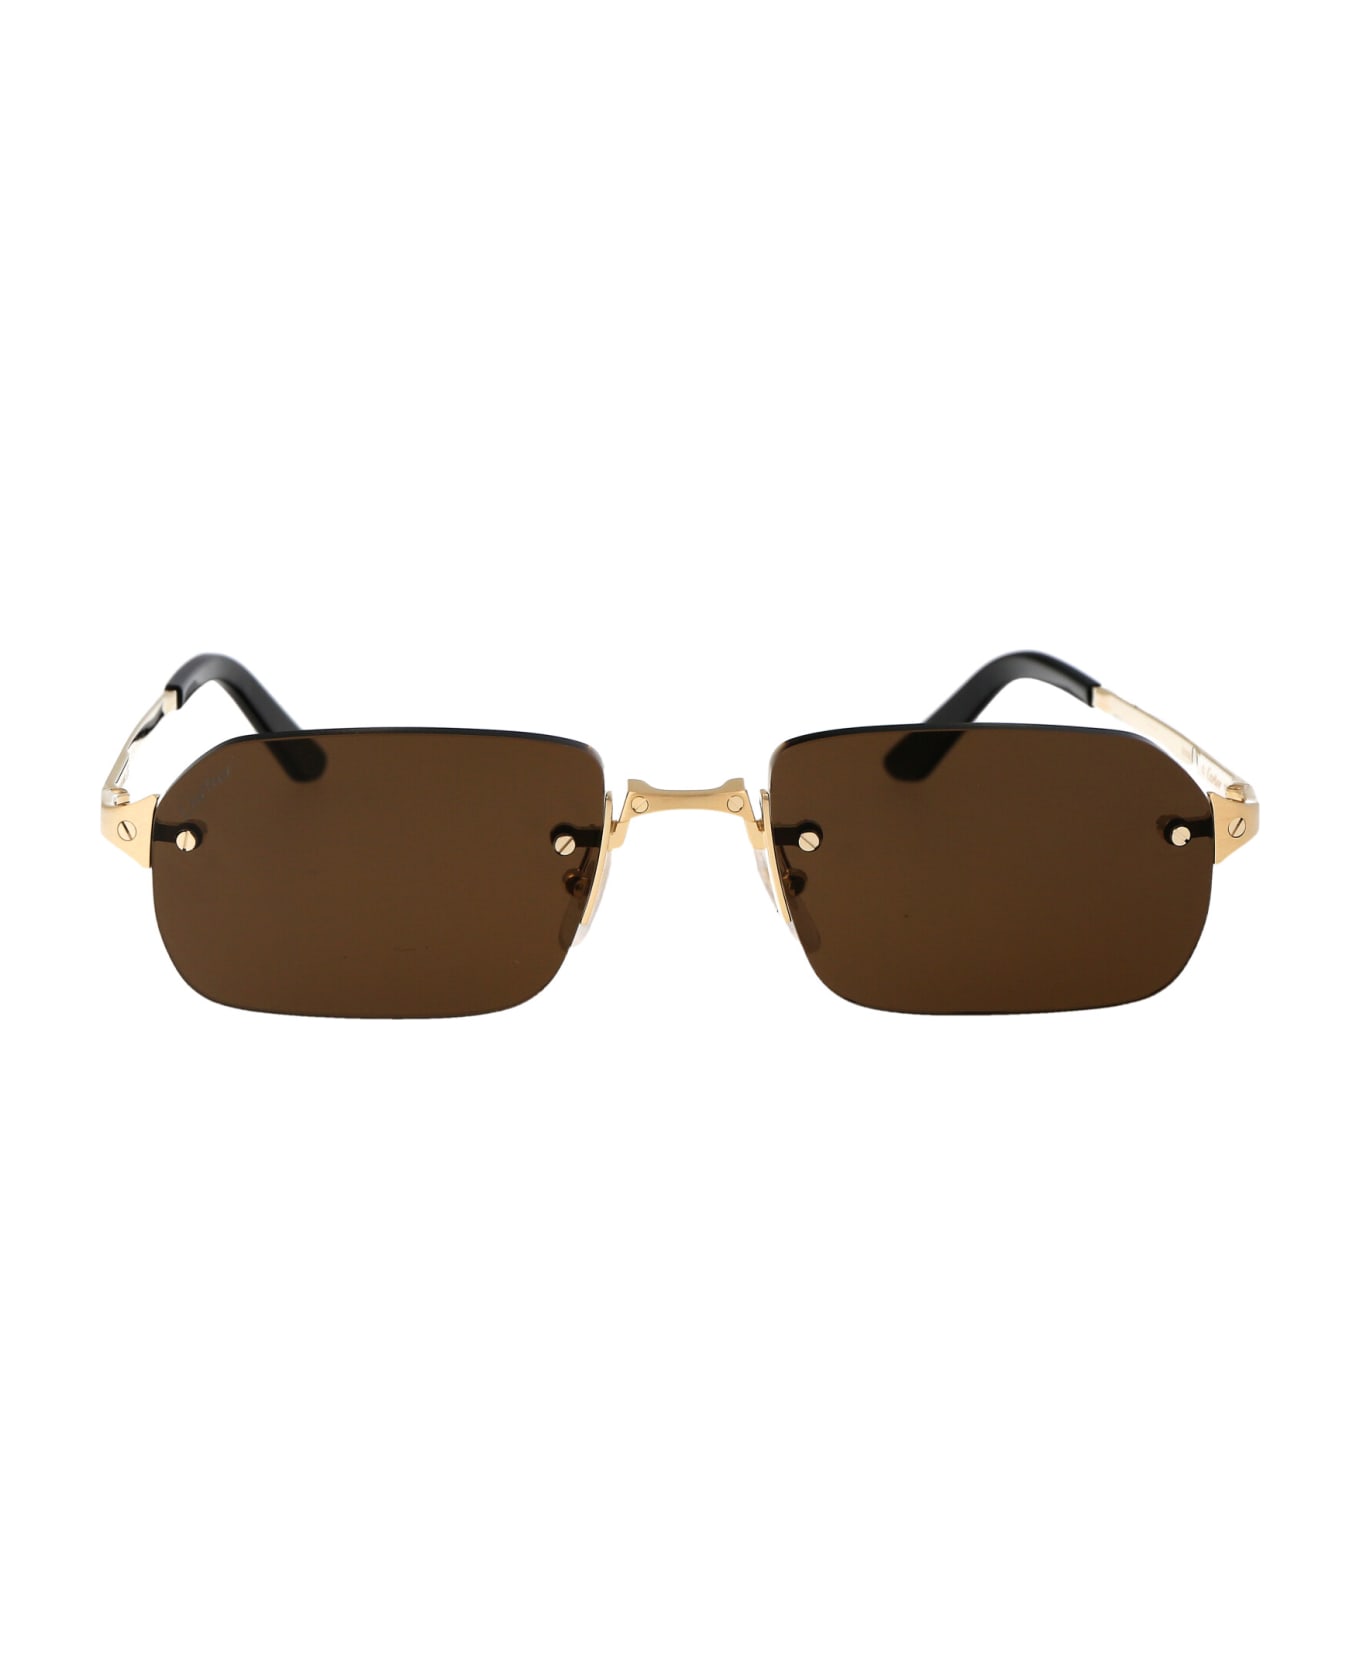 Cartier Eyewear Ct0460s Sunglasses - 002 GOLD GOLD BROWN